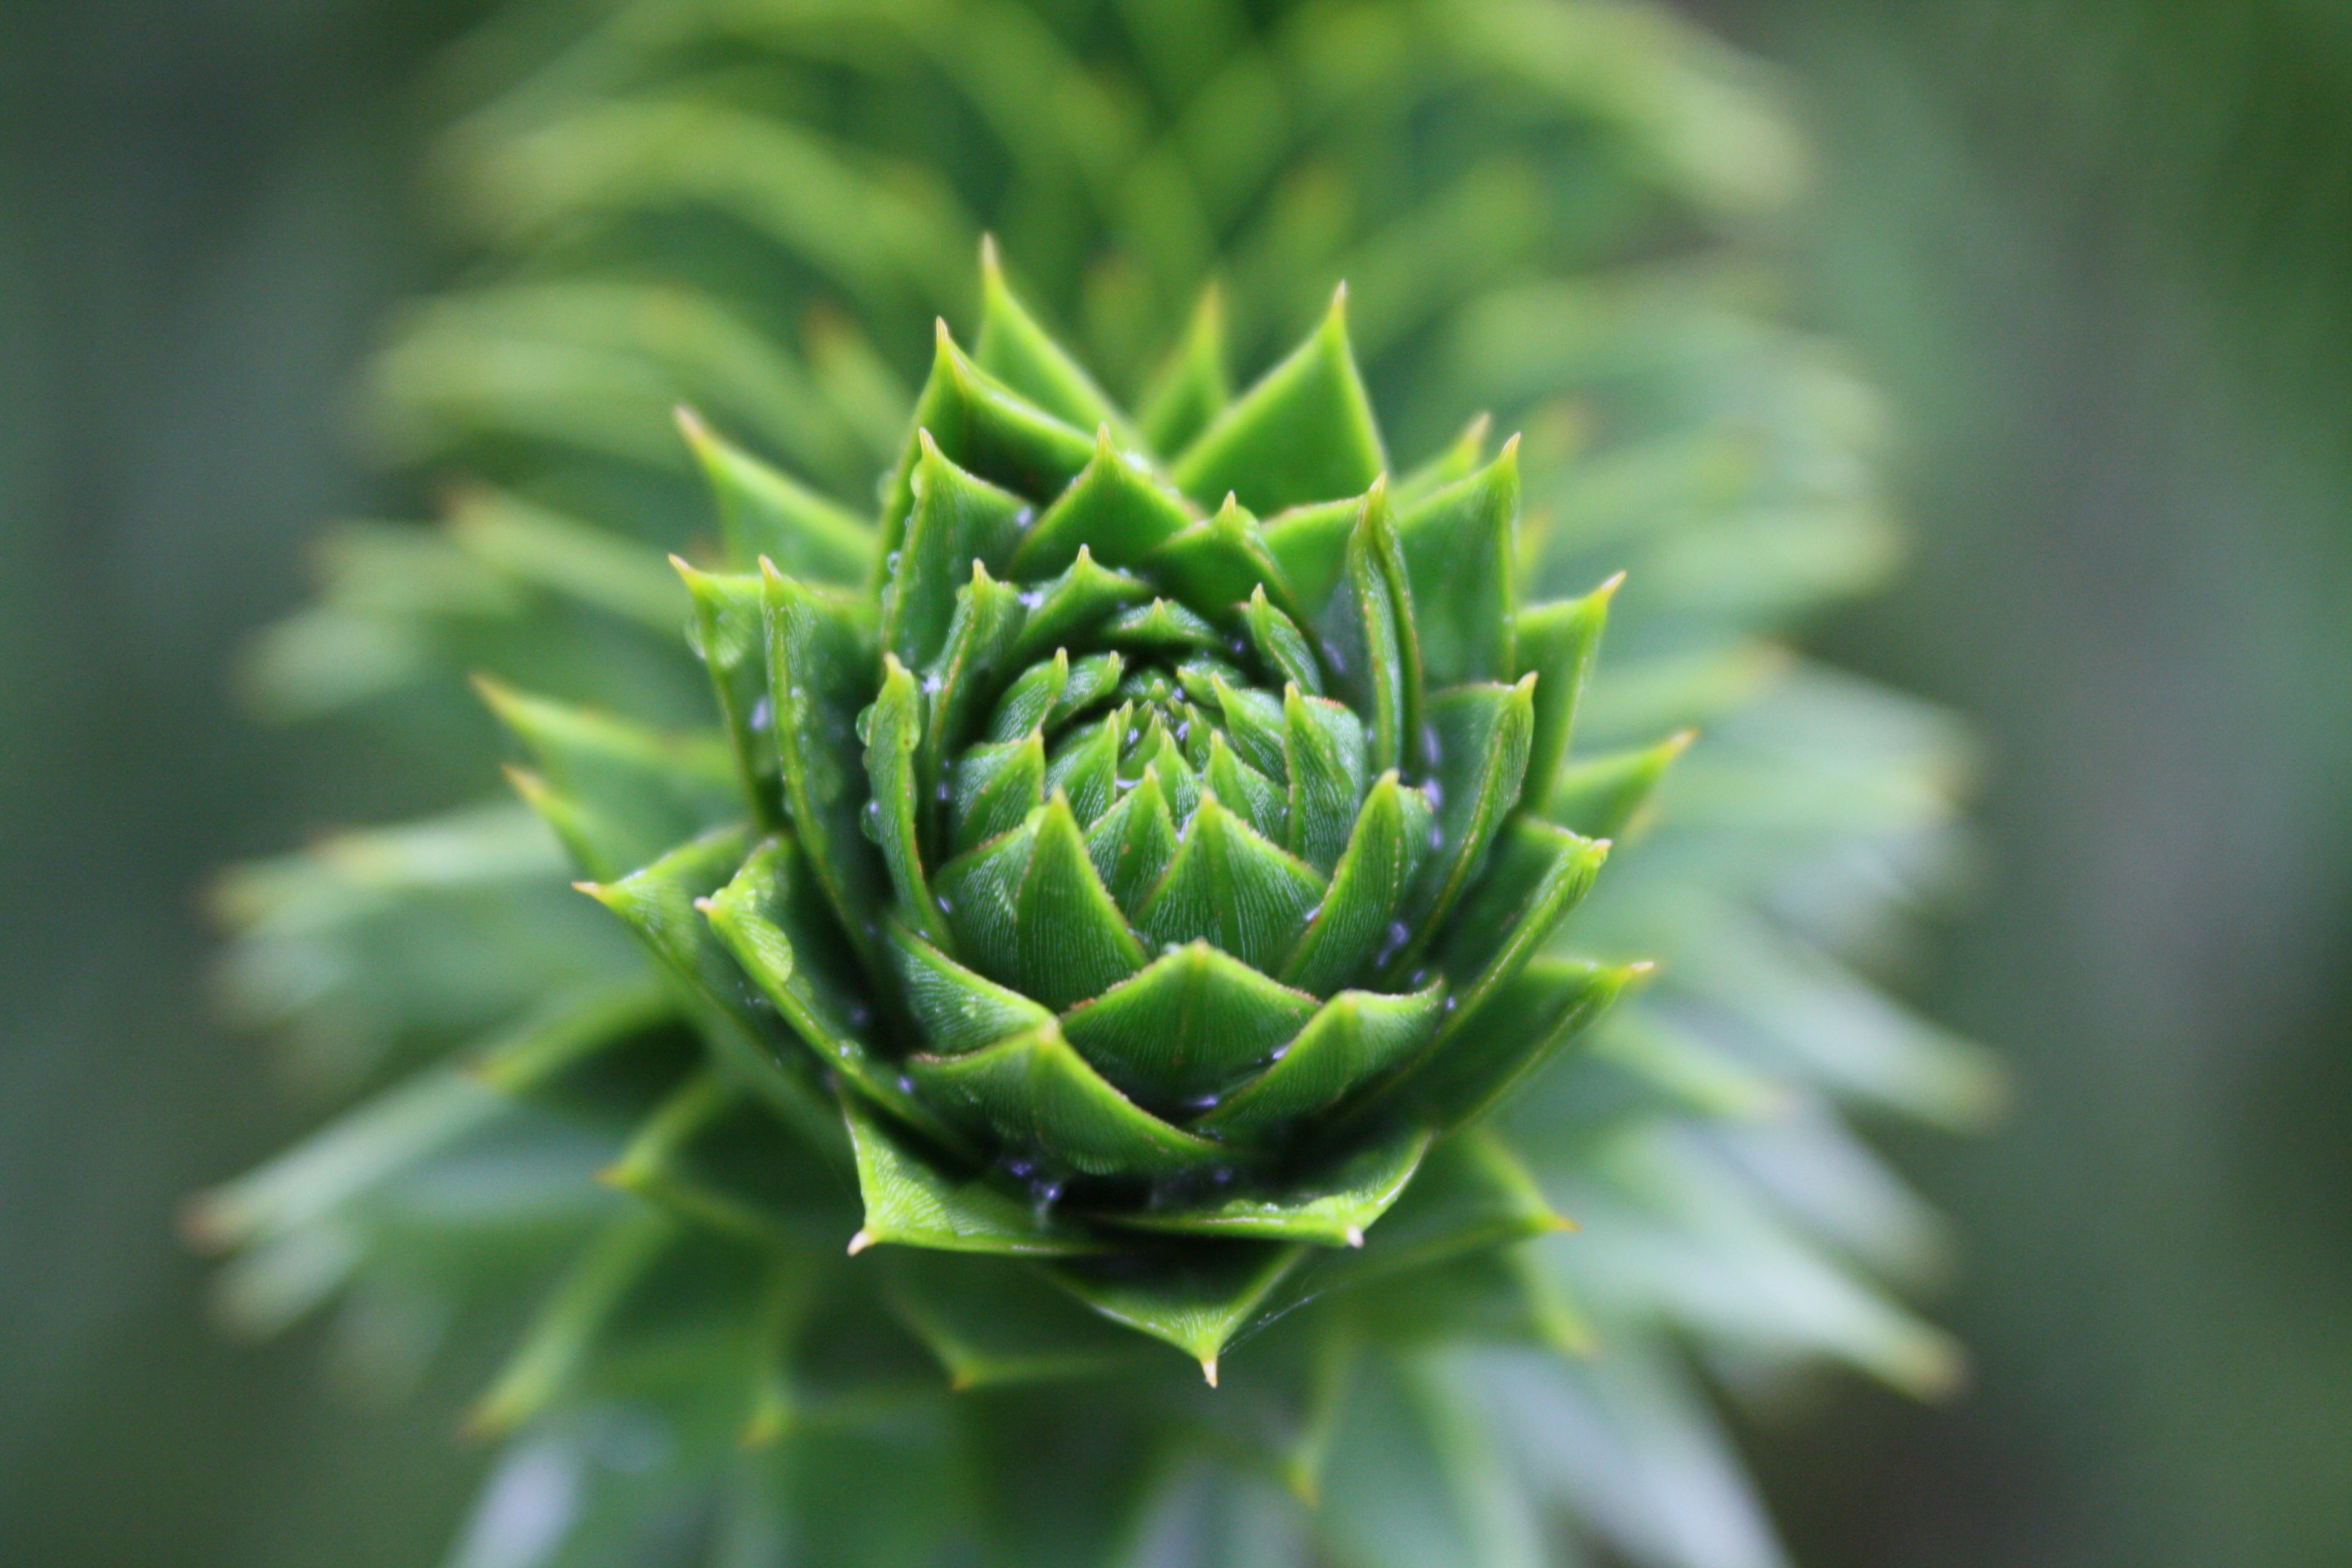 A green spikey thing | My Macro Photos | Pinterest